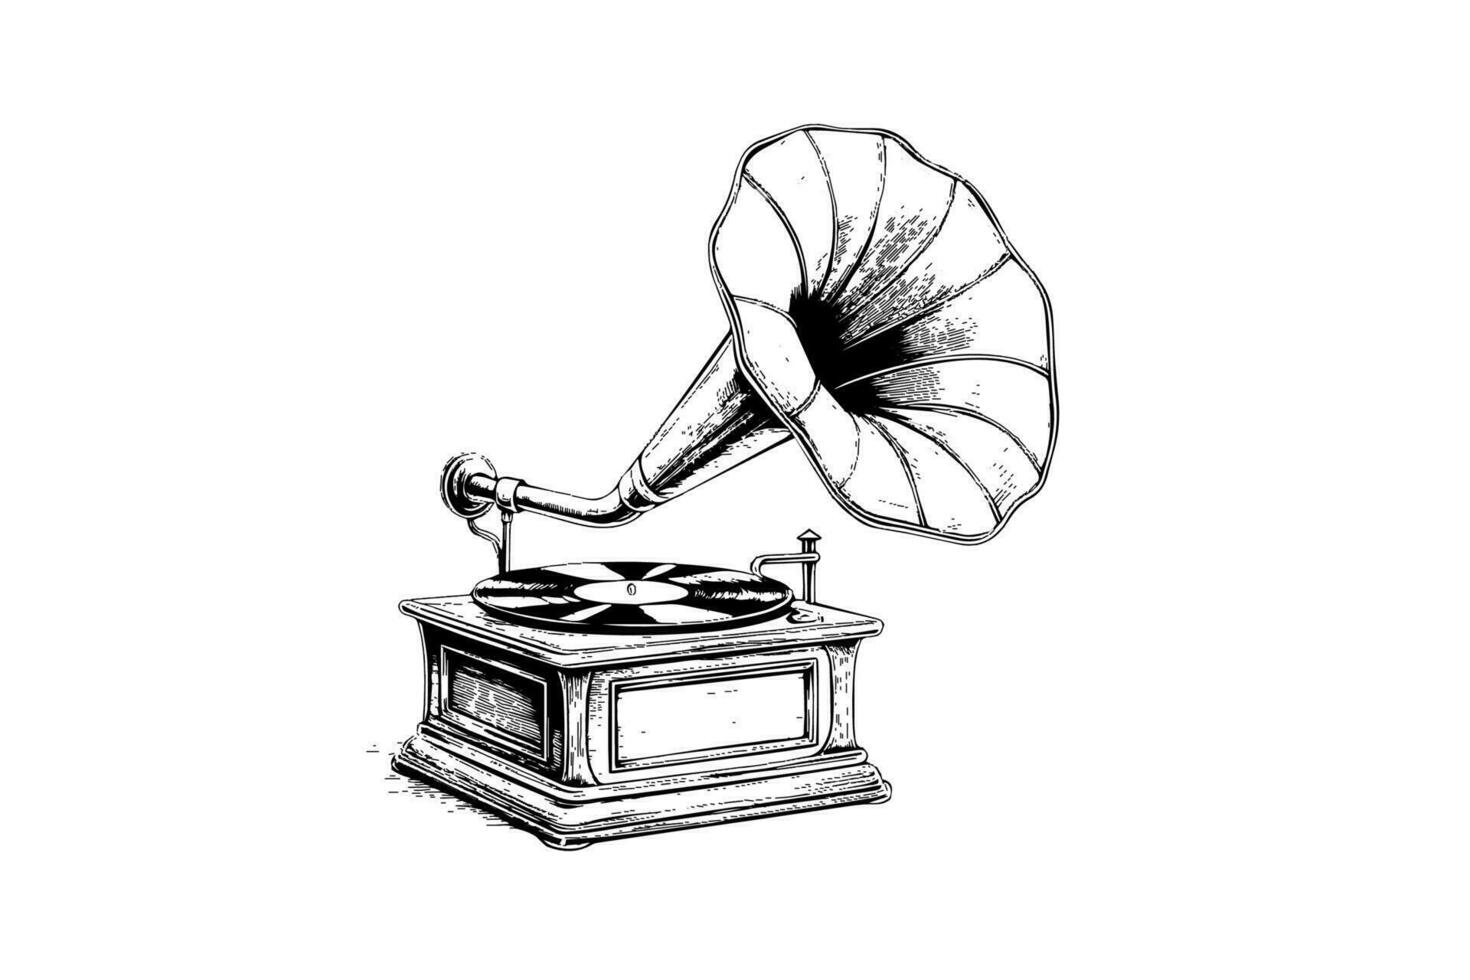 Retro phonograph gramophone vintage engraved vector illustration. Sketch hand drawn art